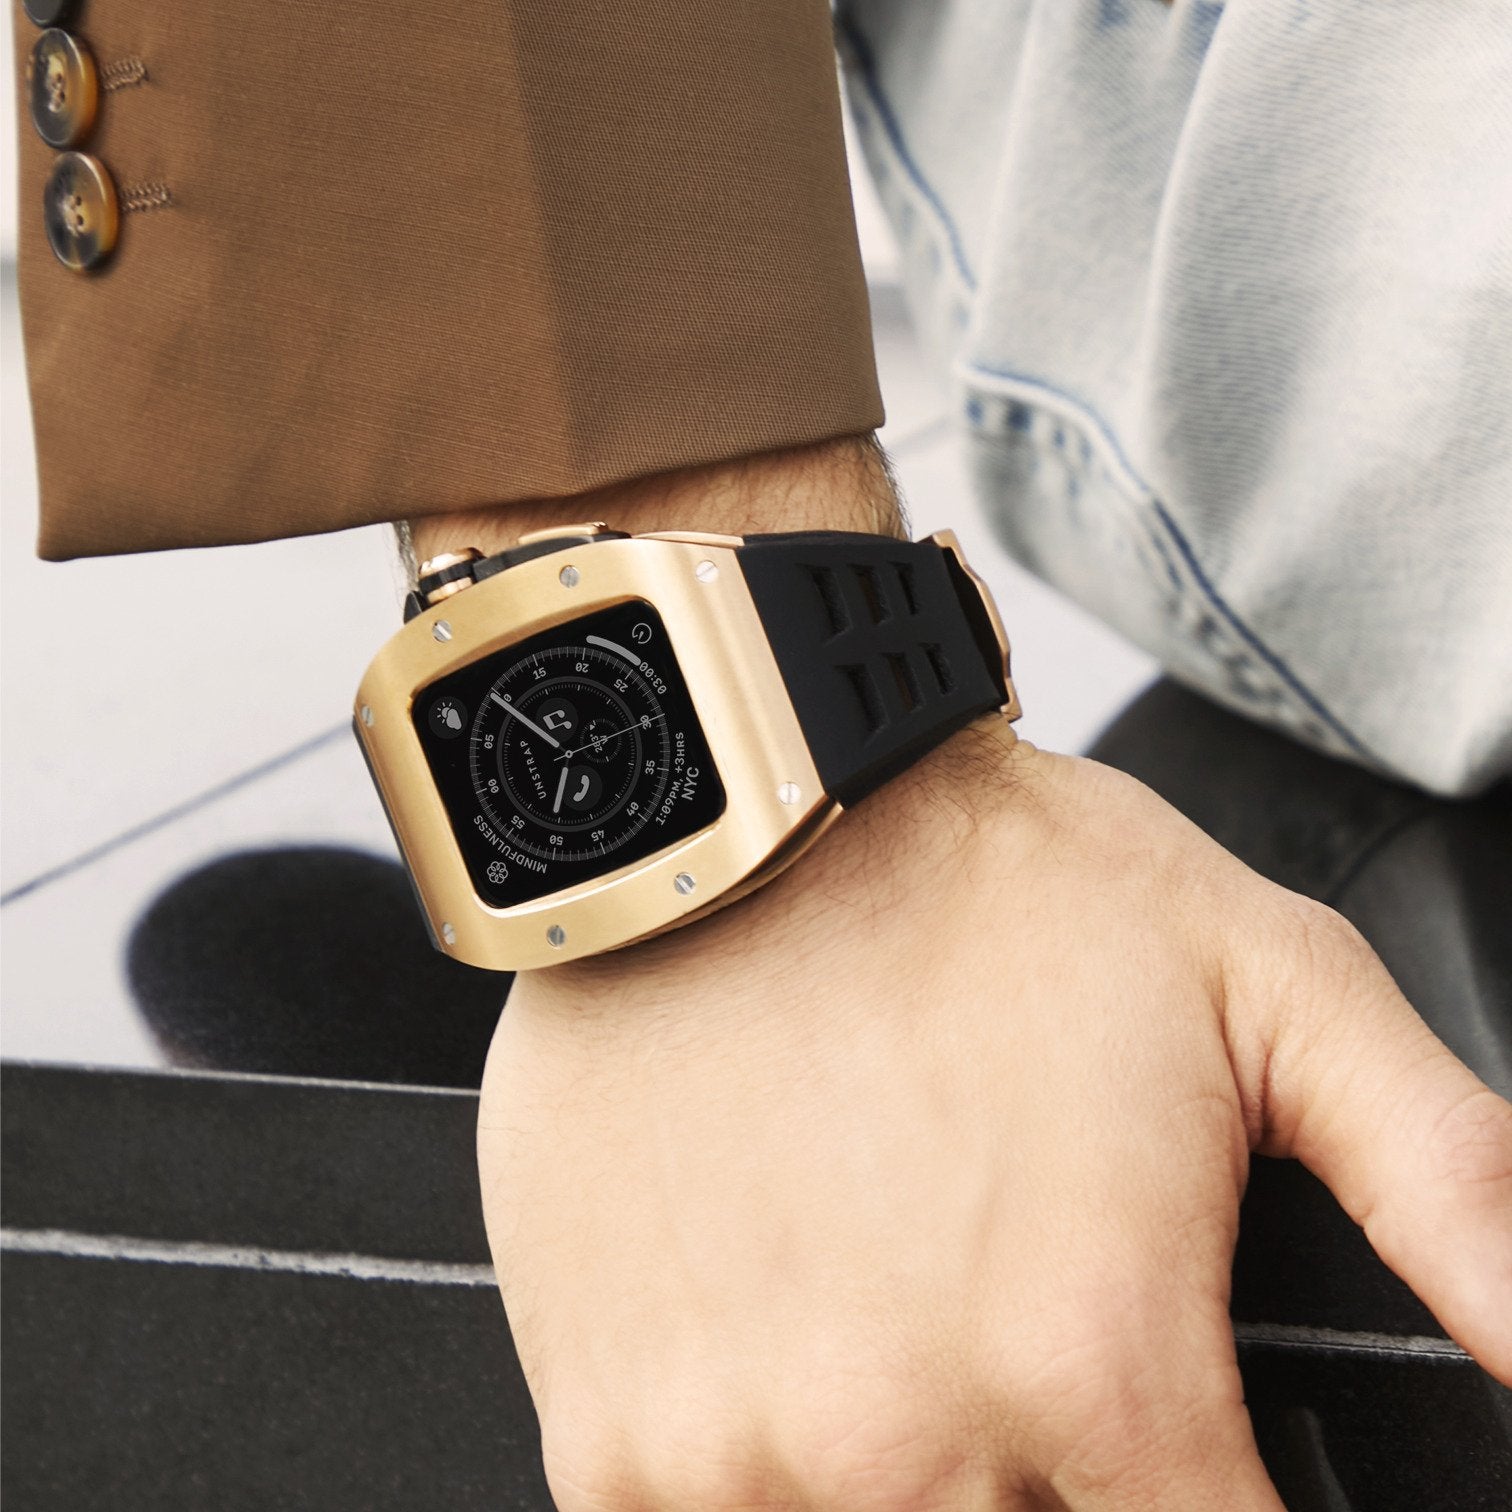 Apple Watch Case Rose Gold Black MC - Rubber